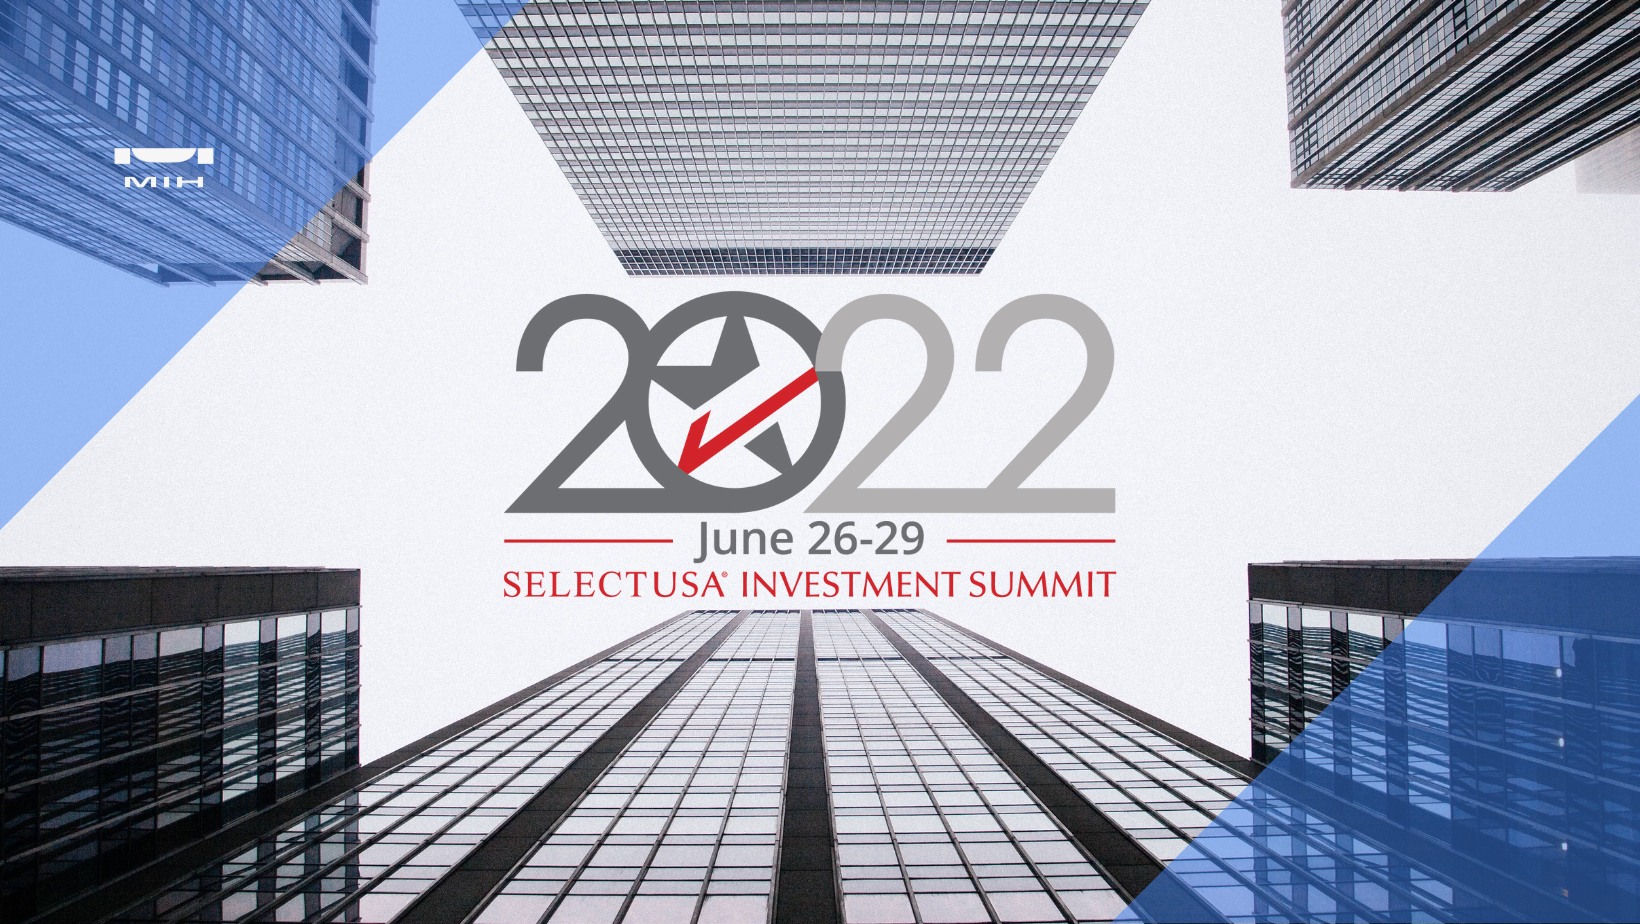 AIT商務組正積極籌組台灣企業代表團前往美國參加 SelectUSA Investment Summit，並安排專供台灣EV供應鏈產業廠商參加的 Spinoff 行程